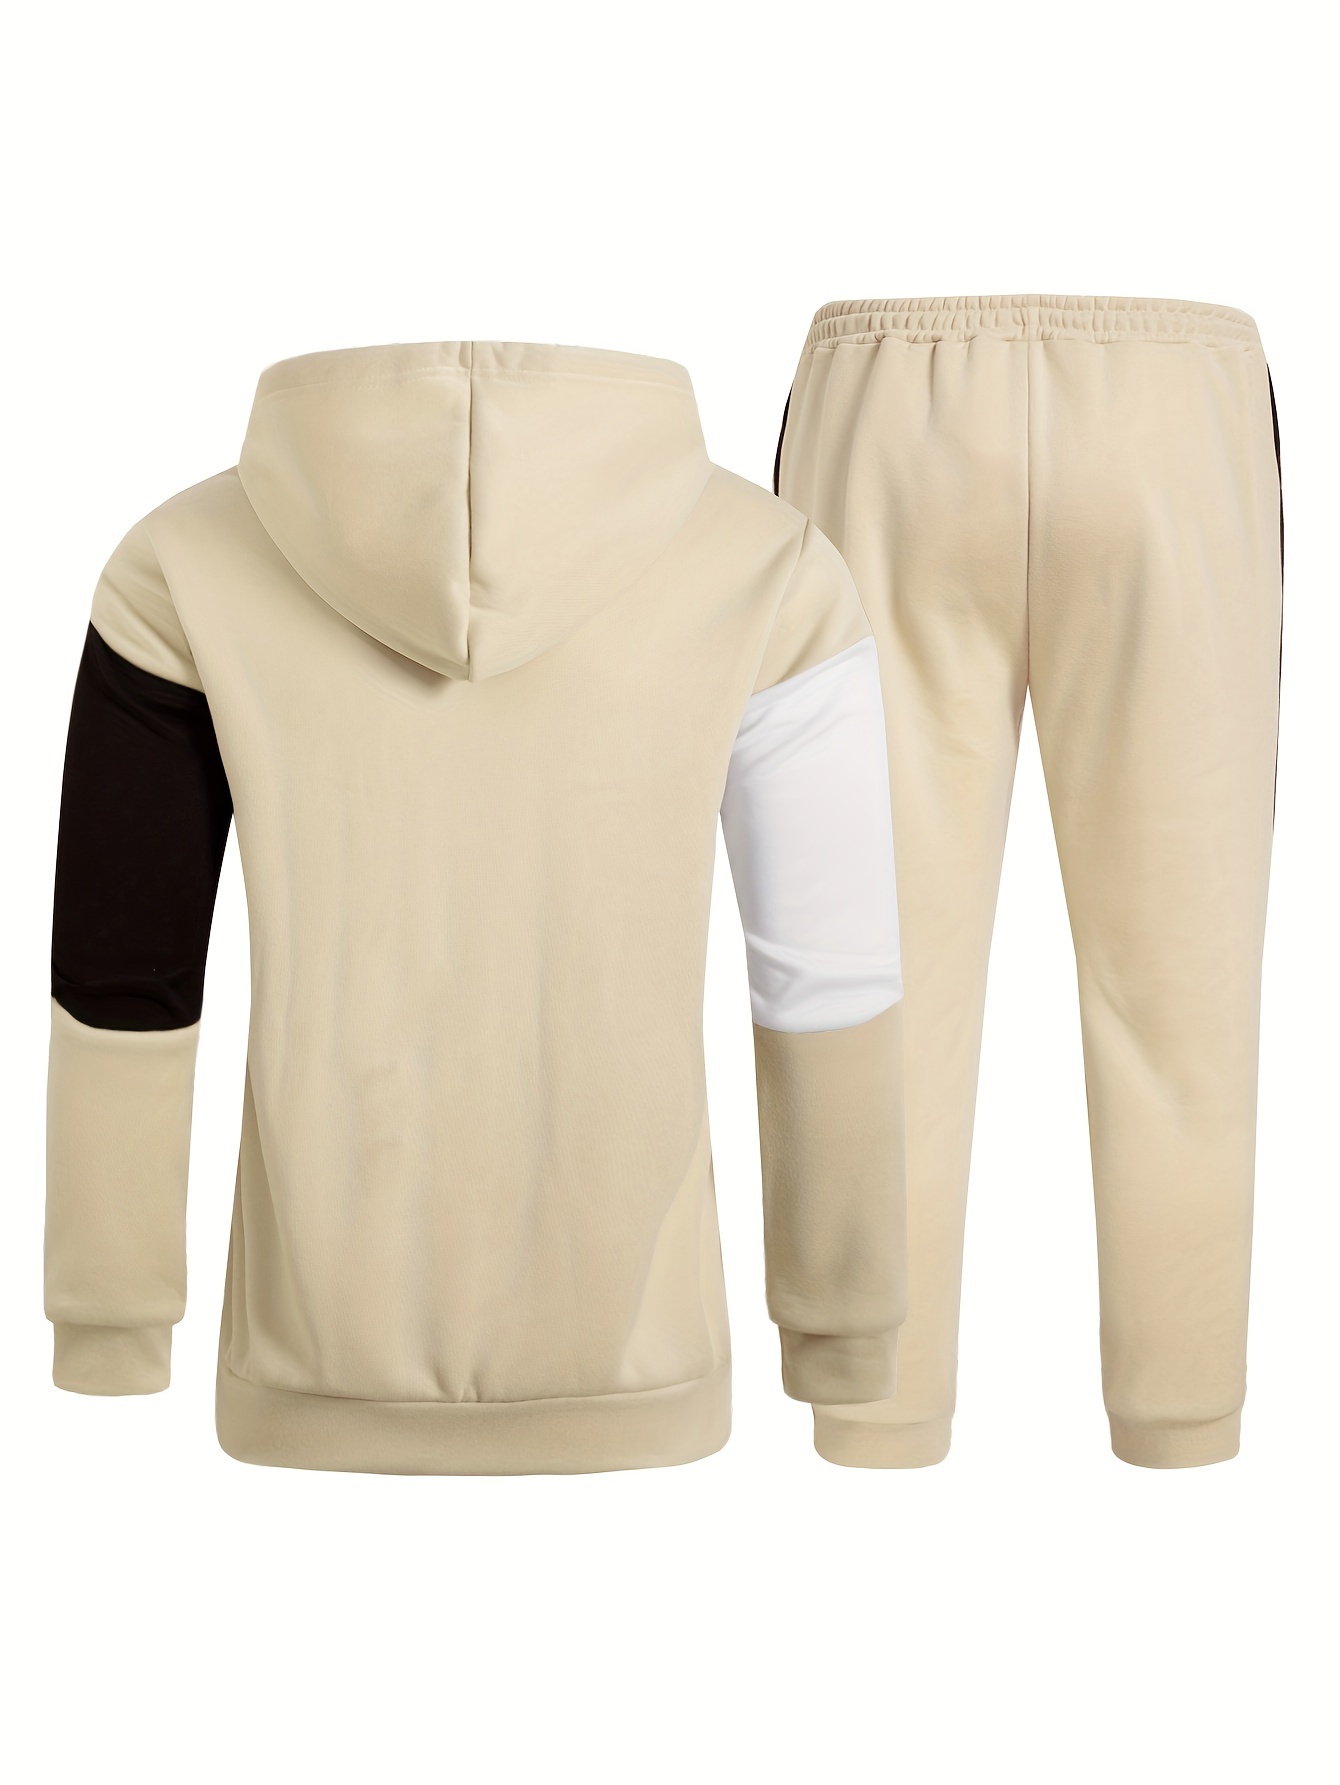 2pcs Colorblock Running Athletic Suit Zip Up Jacket & Compression Leggings